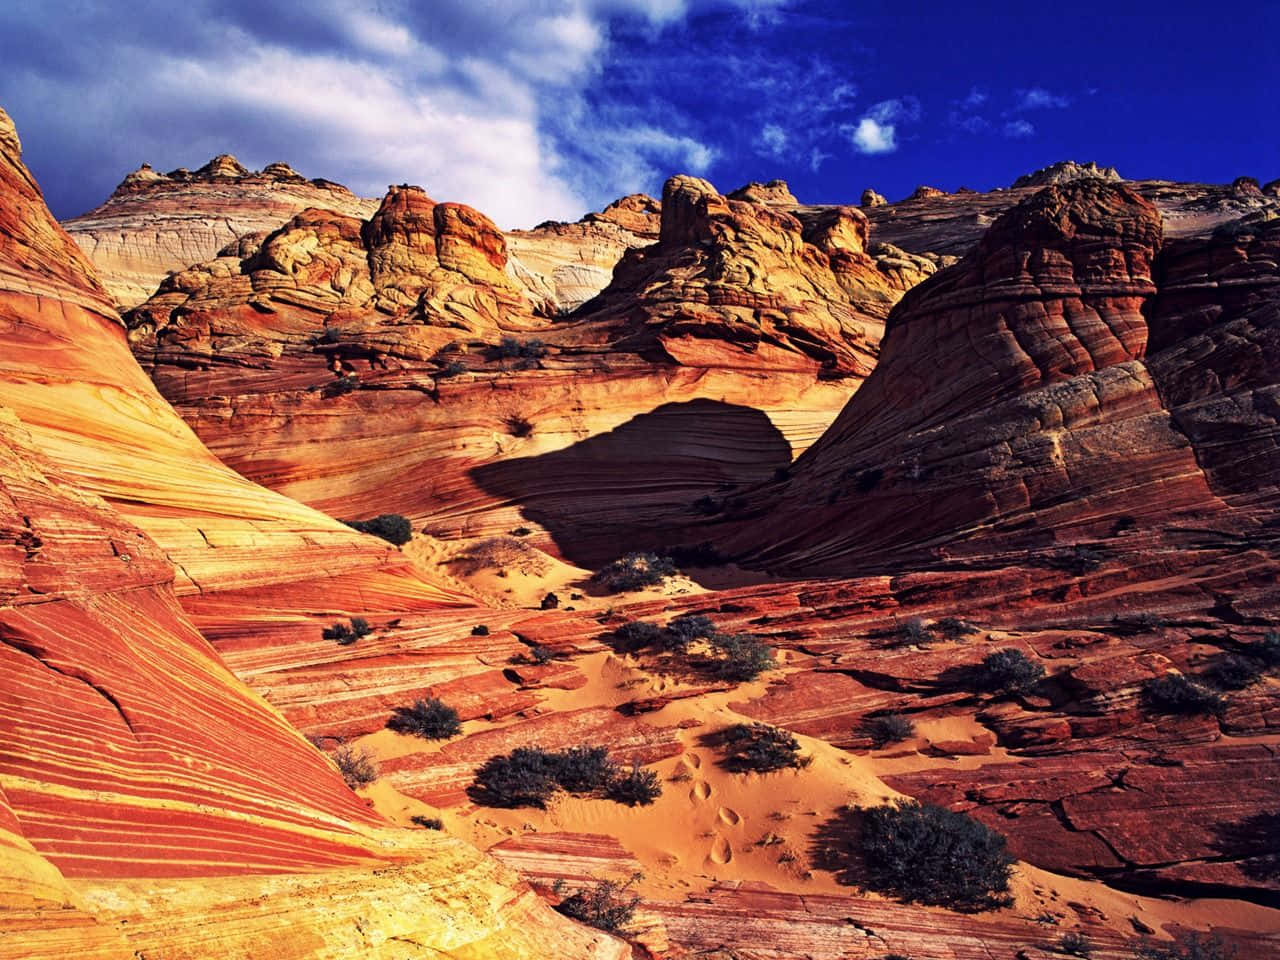 “Admiring the beauty of Arizona’s deserts"